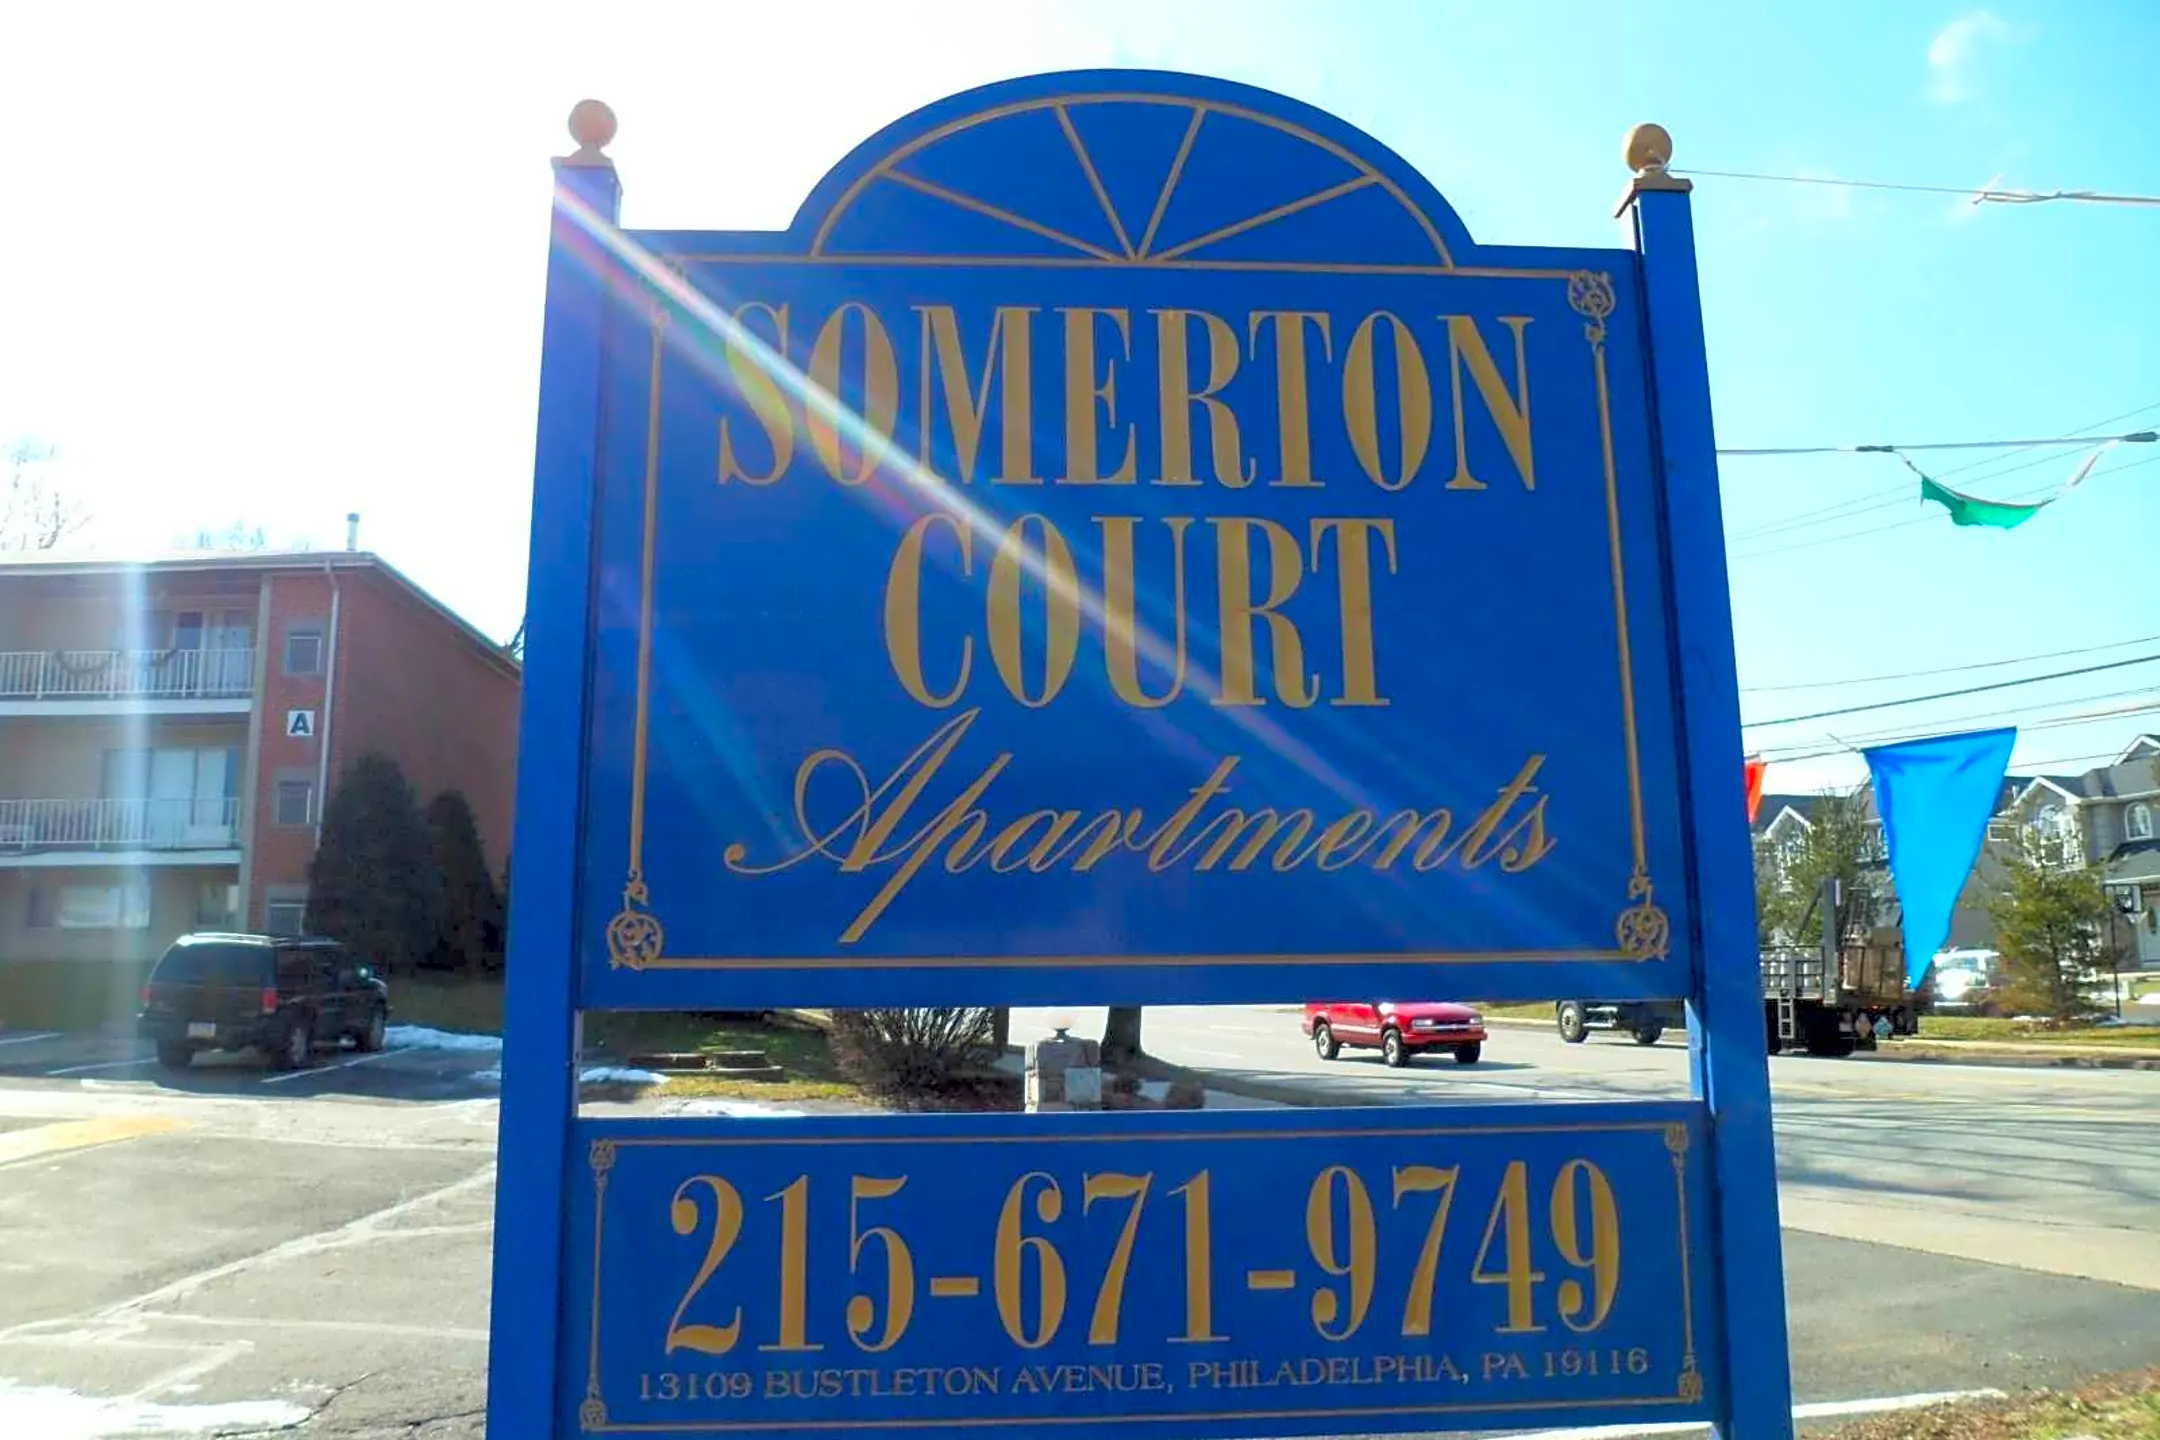 Building - Somerton Court - Philadelphia, PA